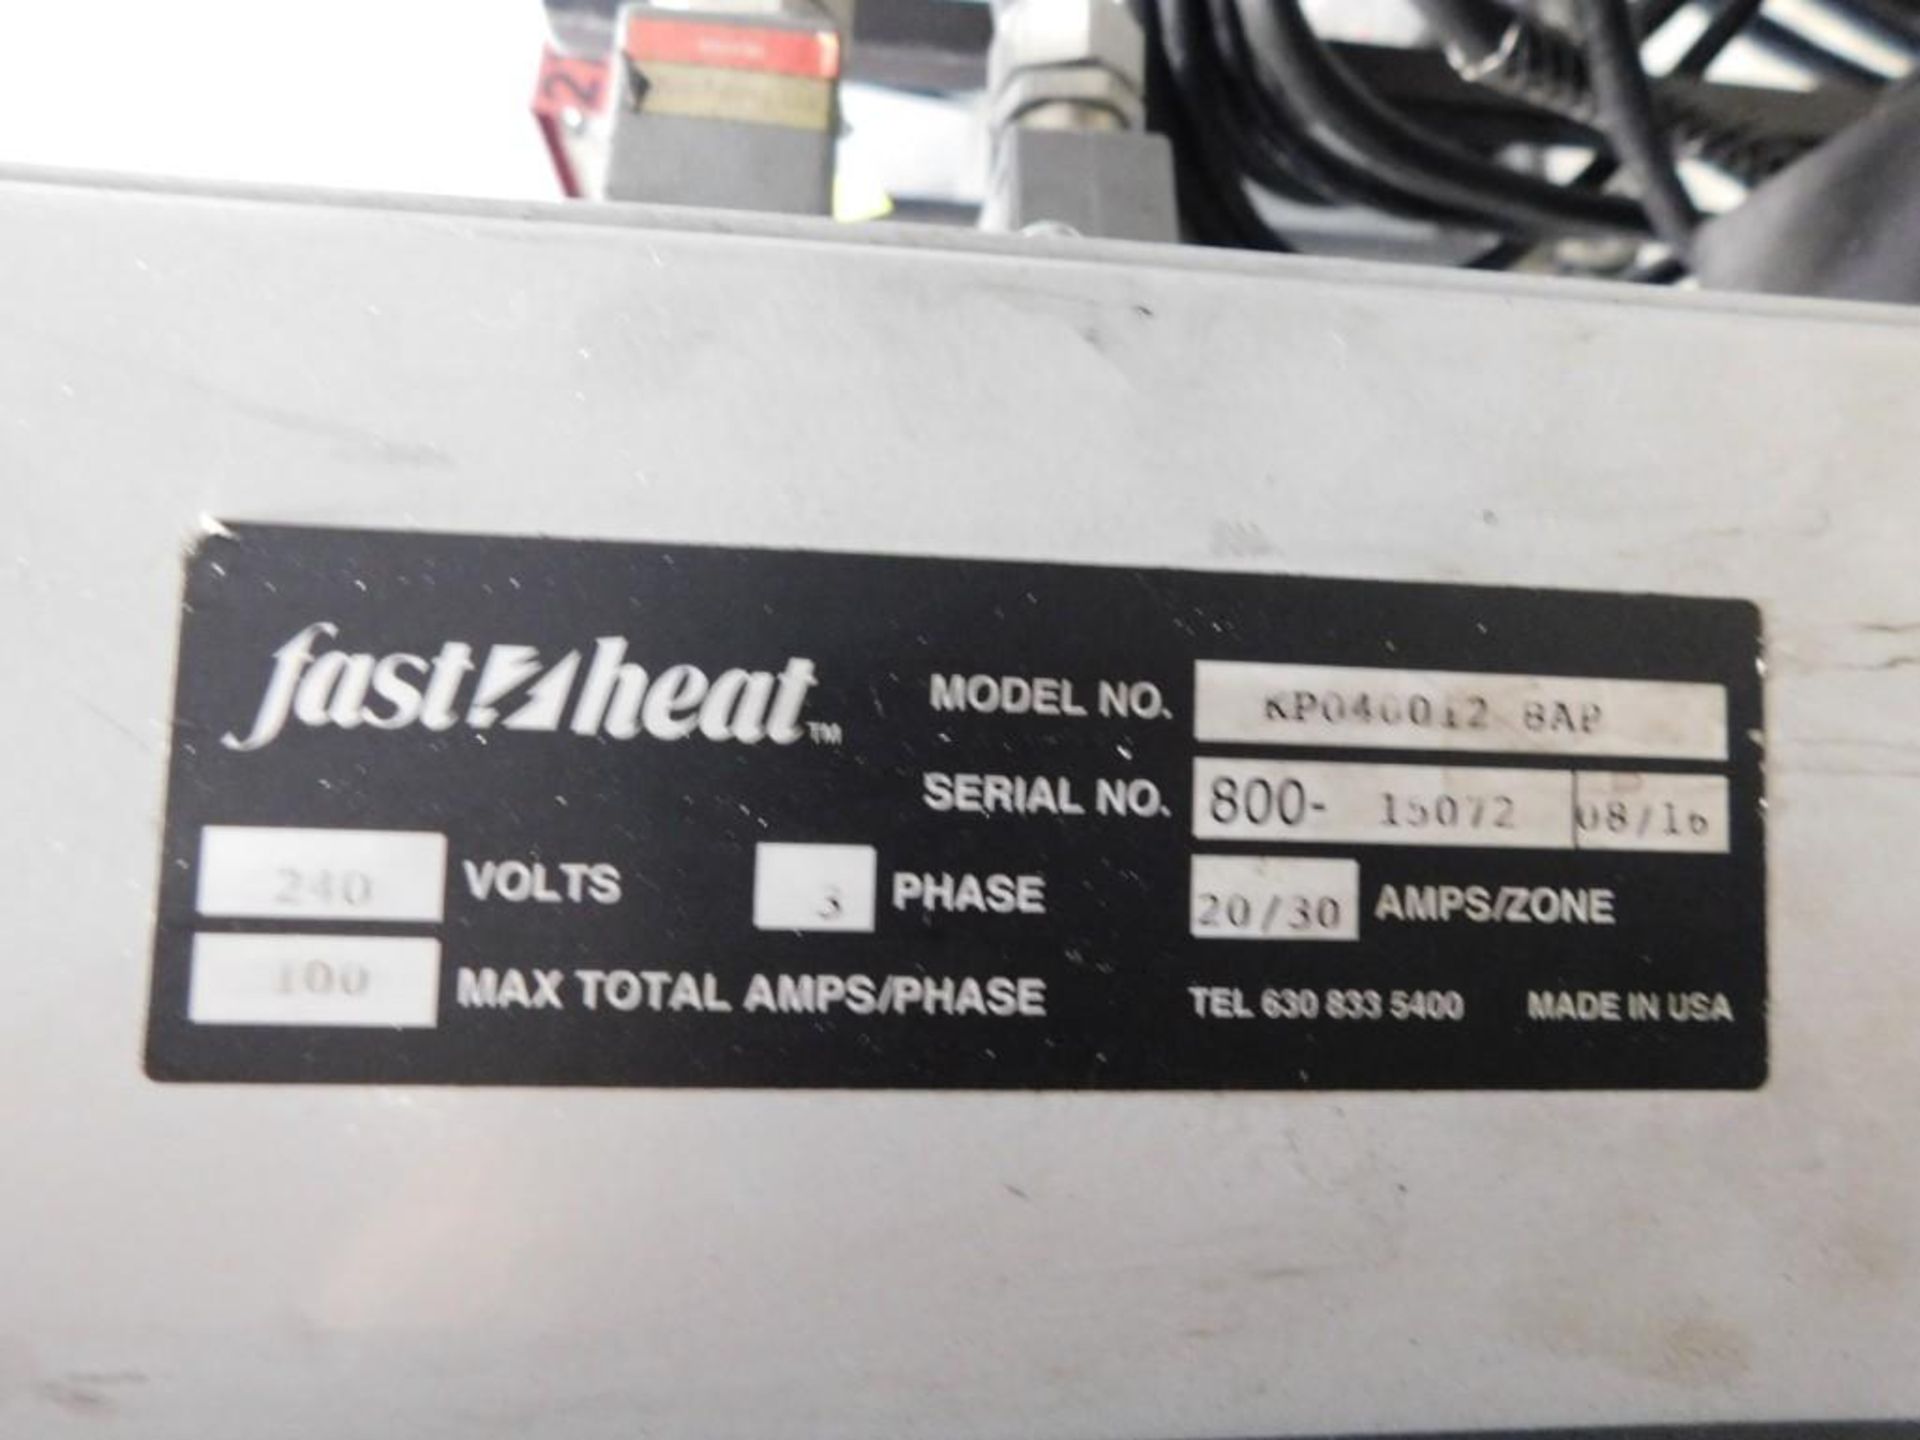 Fast Heat KP040012BAP Hot Runner Control, S/N 800-15072 - Image 5 of 5